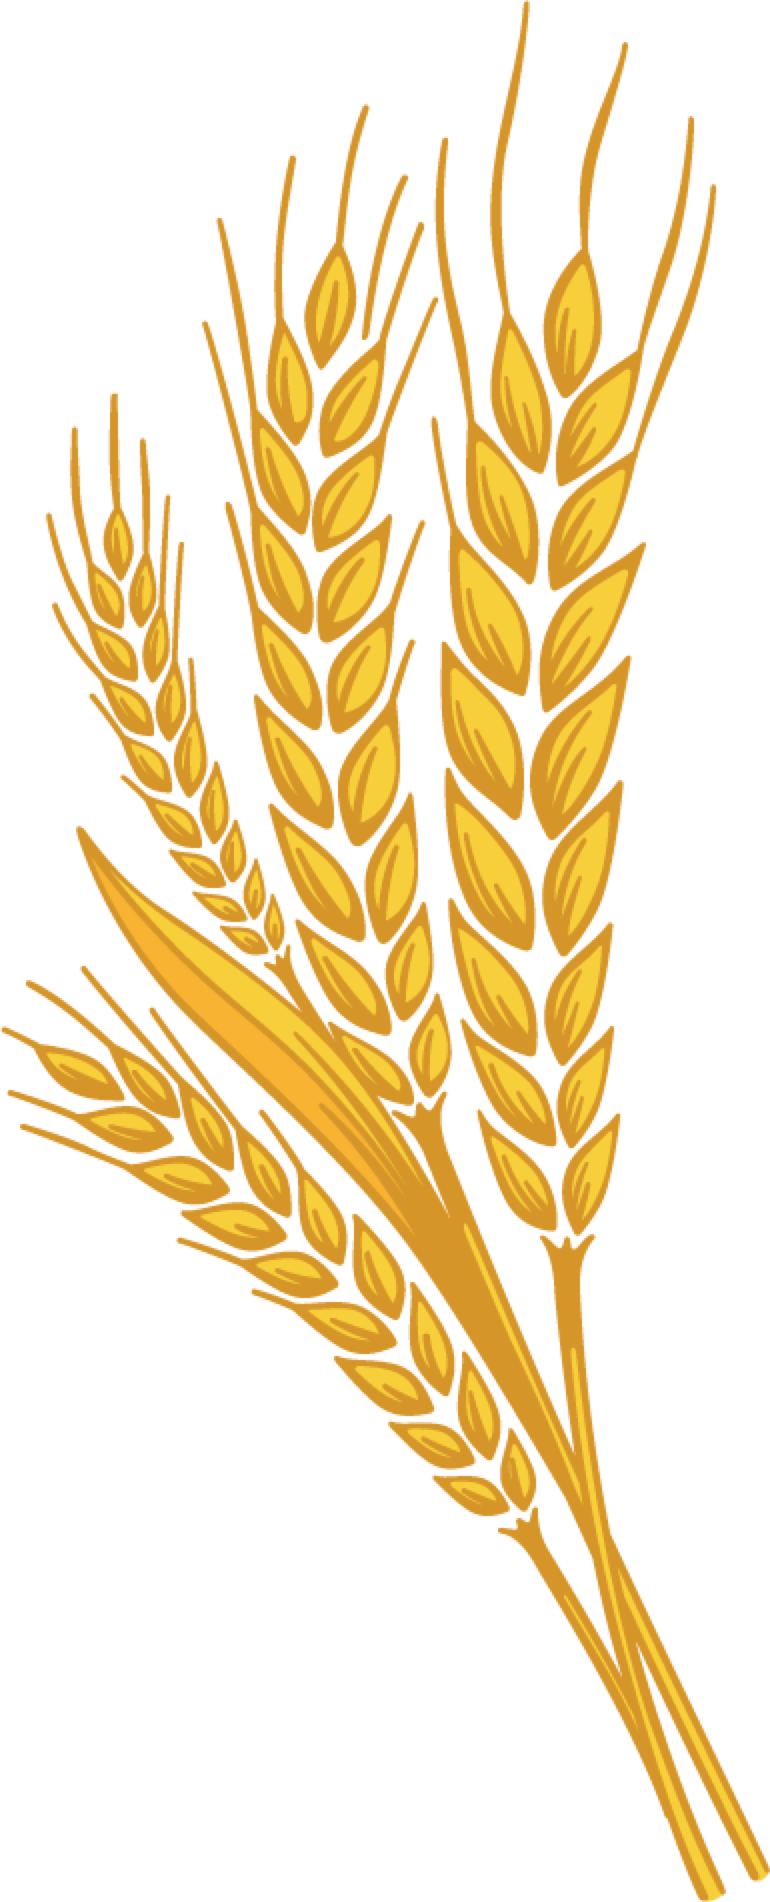 Grain clipart yellow wheat, Grain yellow wheat Transparent